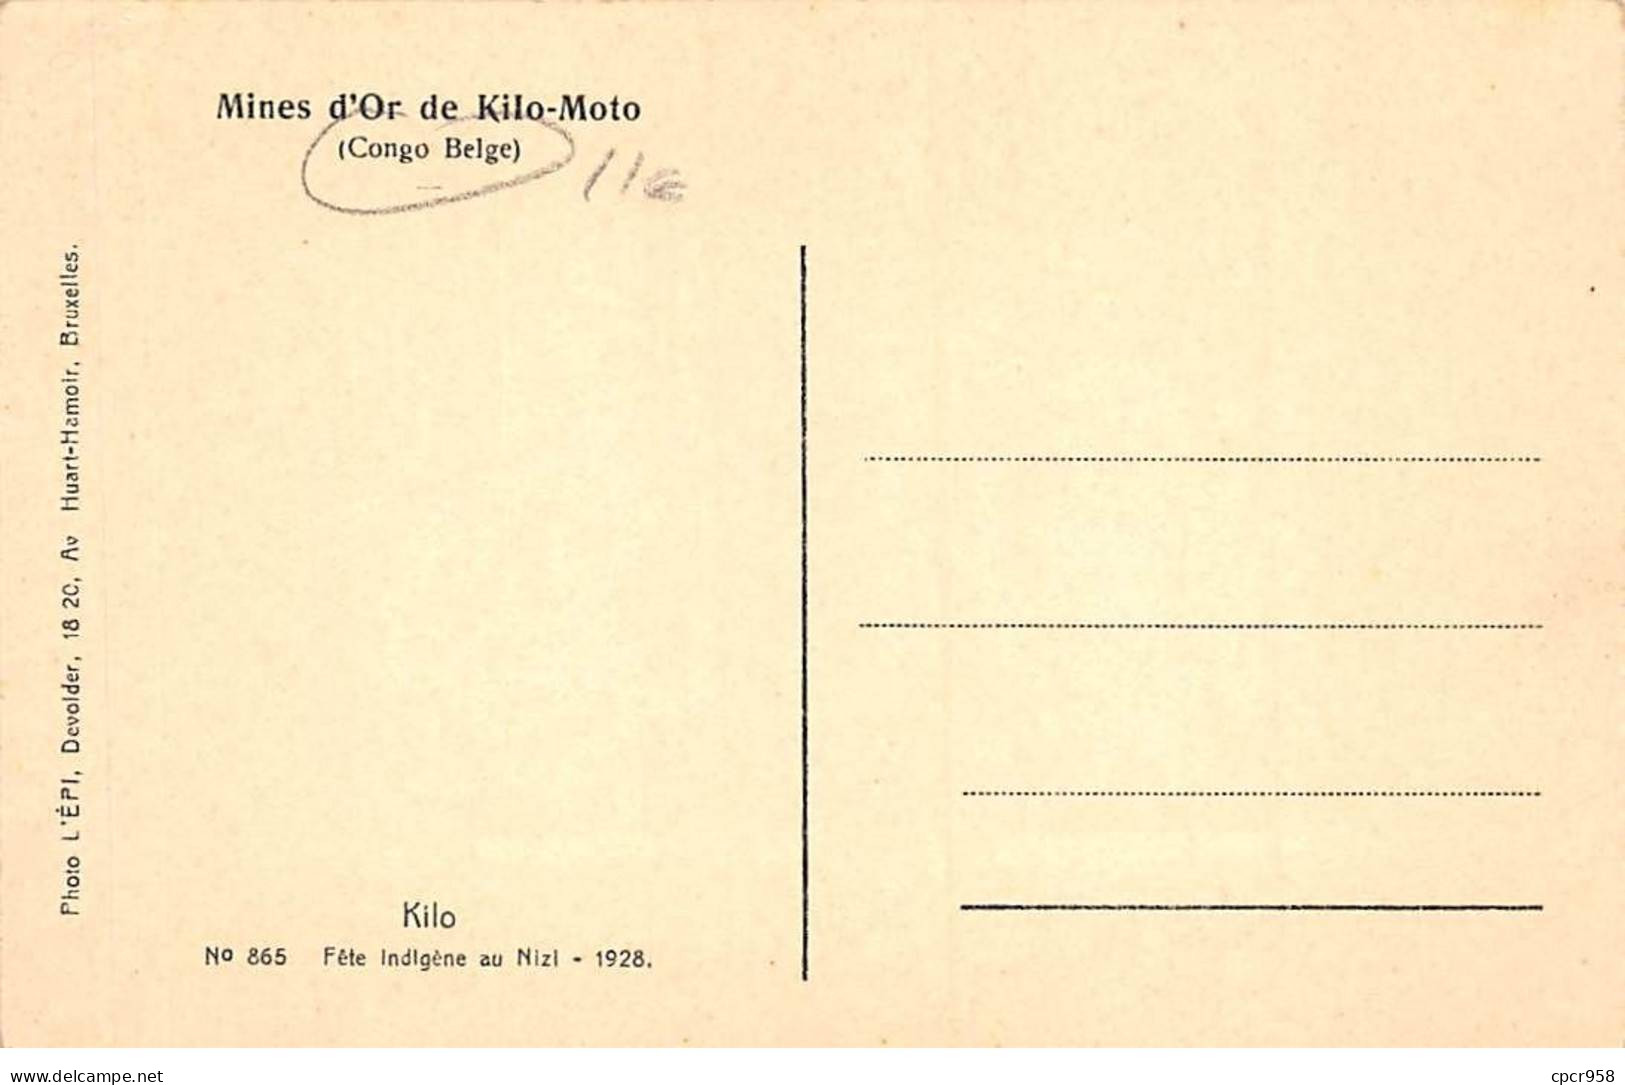 CONGO - SAN53905 - Mines D'or De Kilo Moto - Fête Indigène Au Nizi - 1928 - Congo Belge